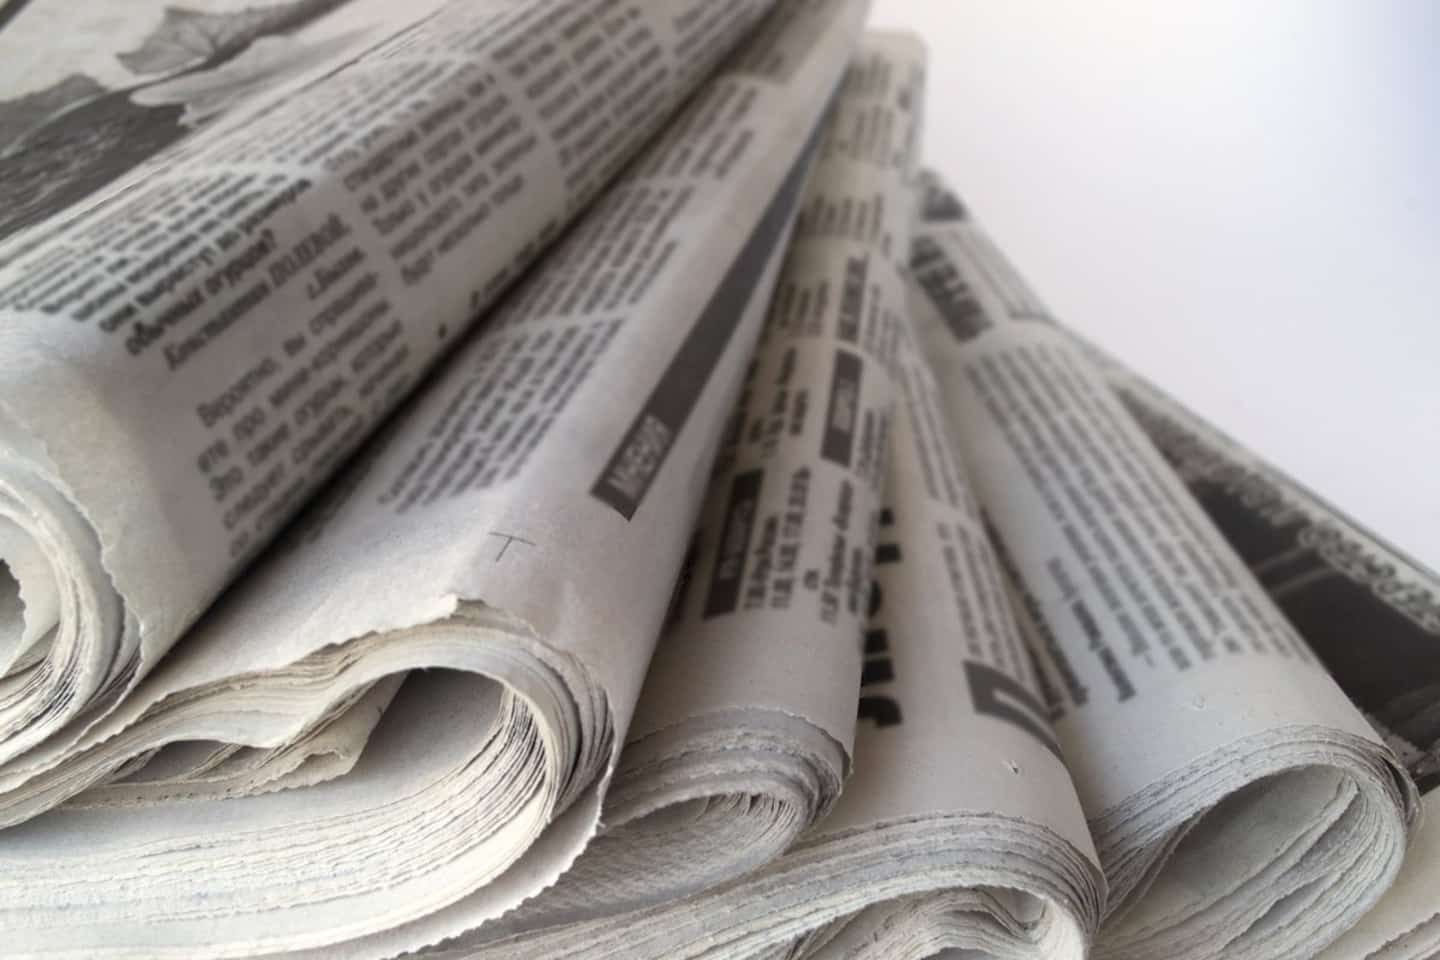 The Novaya Gazeta newspaper threatened to cease all circulation